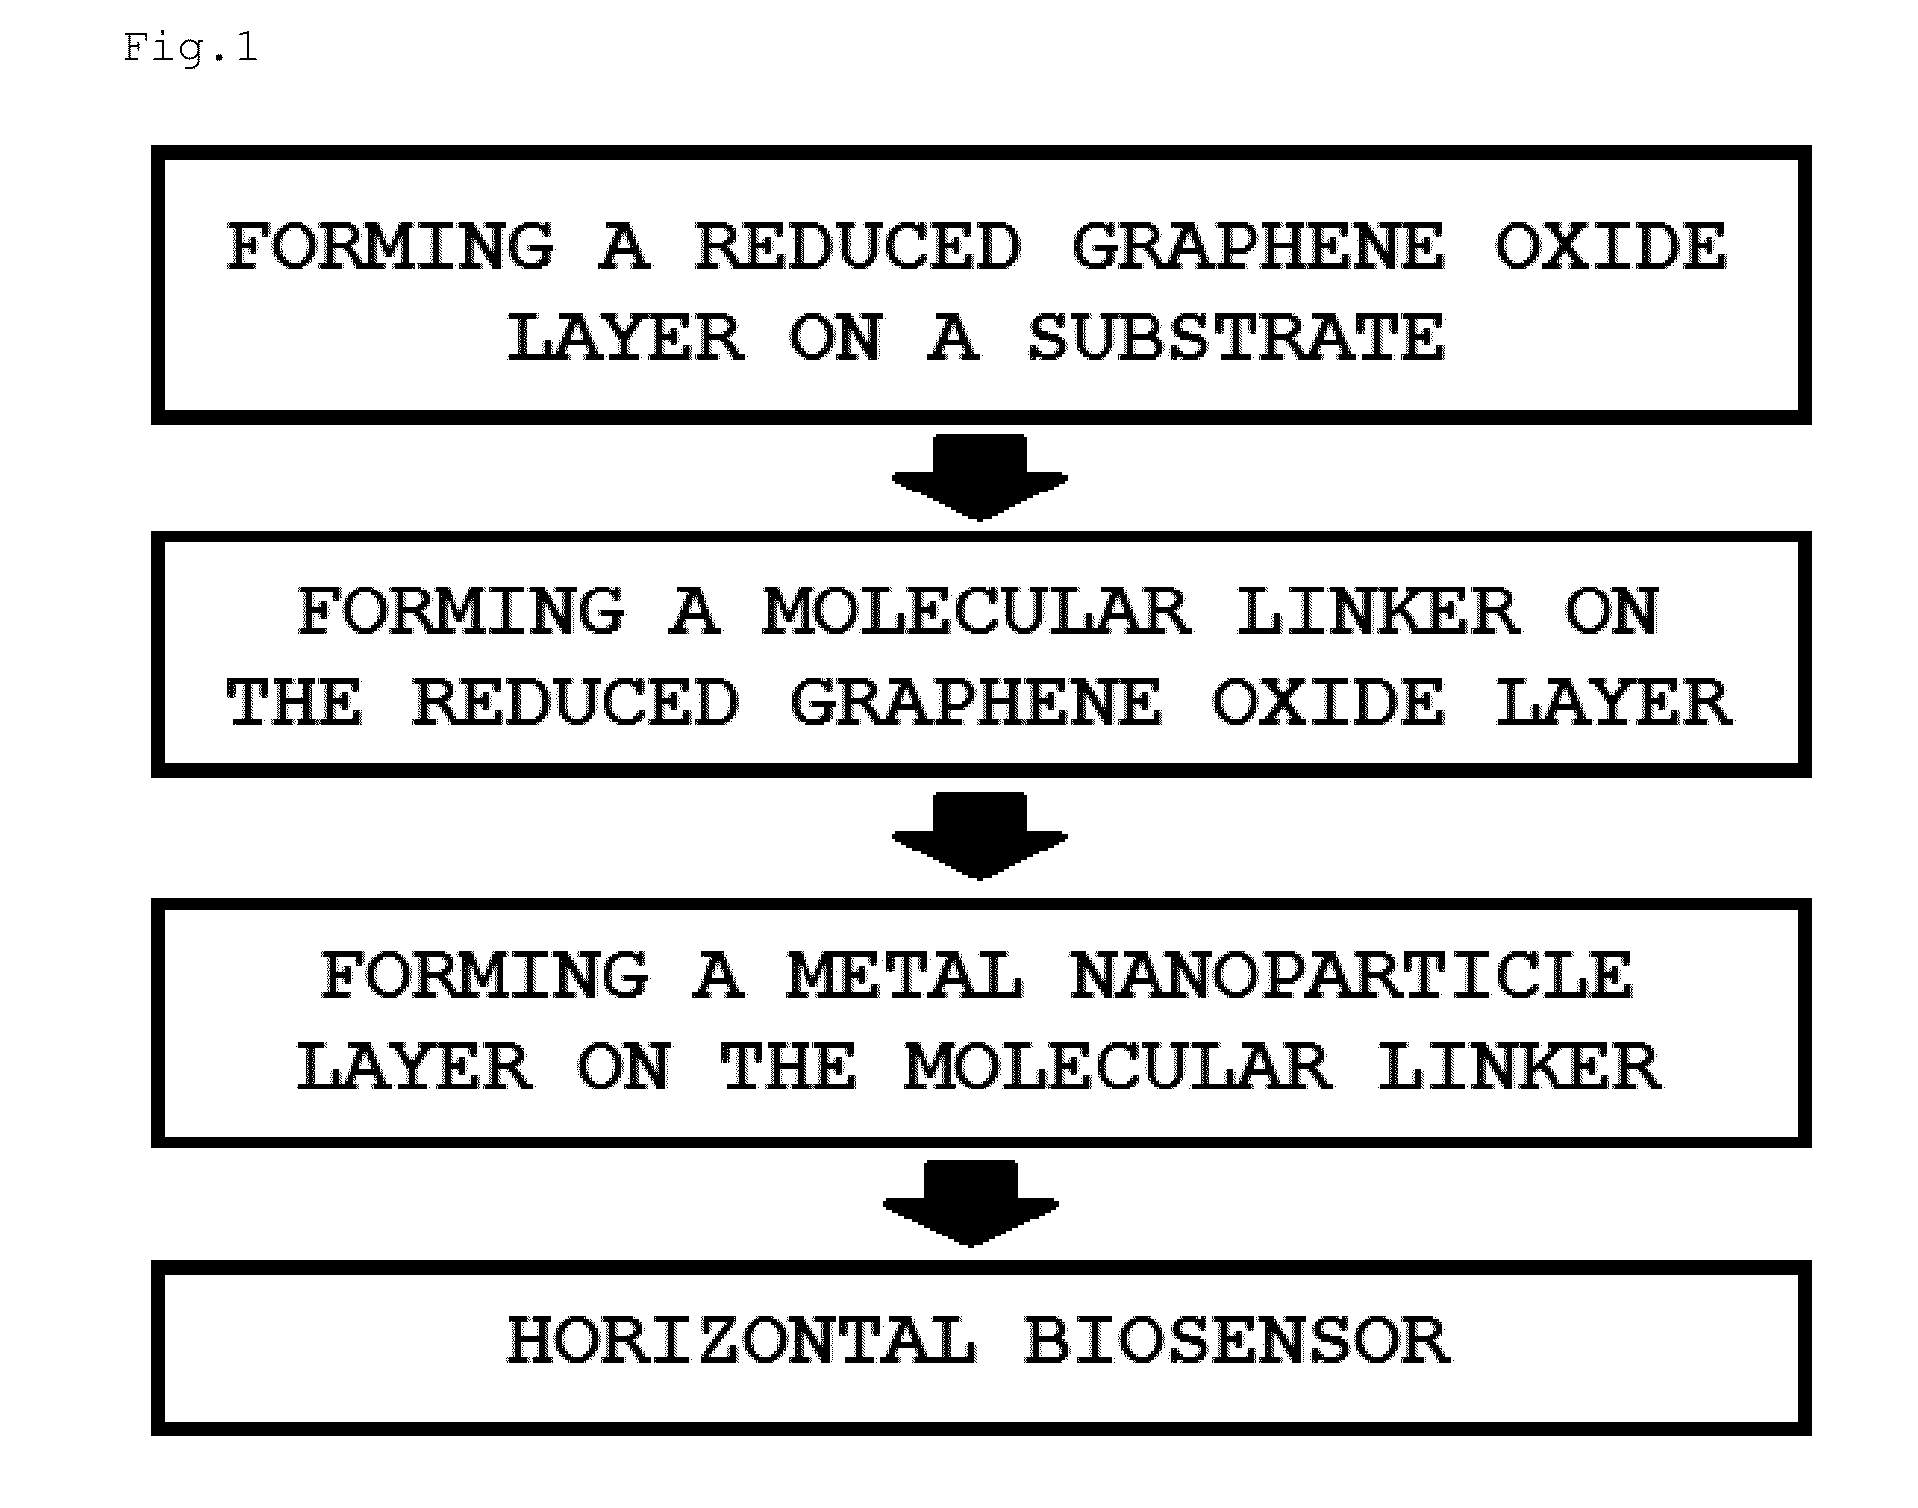 Biosensor comprising reduced graphene oxide layer